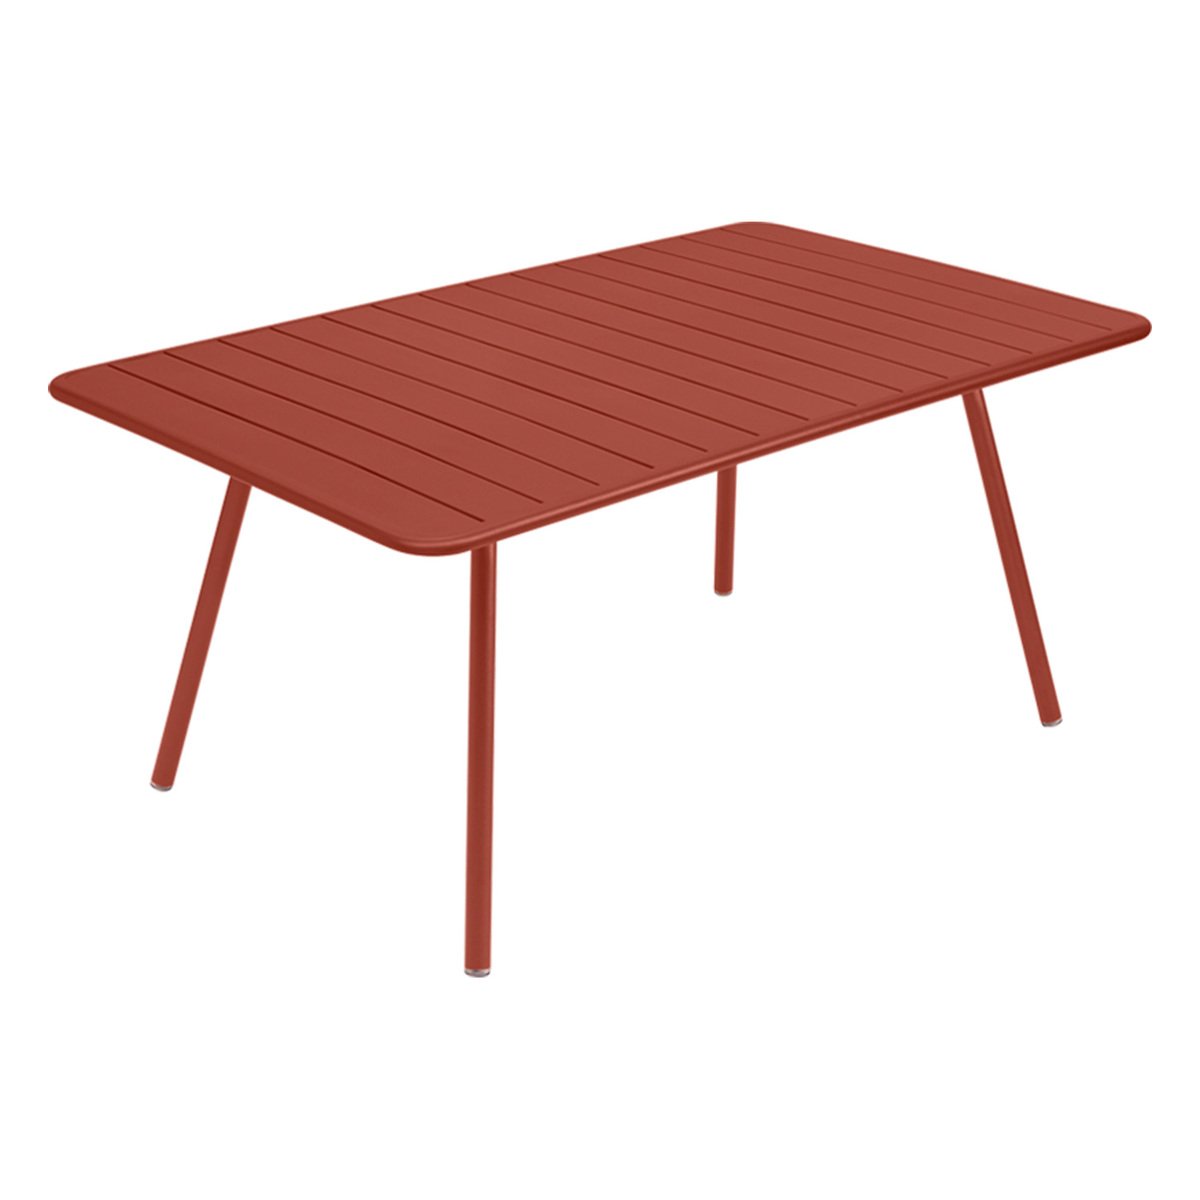 Fermob Luxembourg pöytä, 165 x 100 cm, red ochre